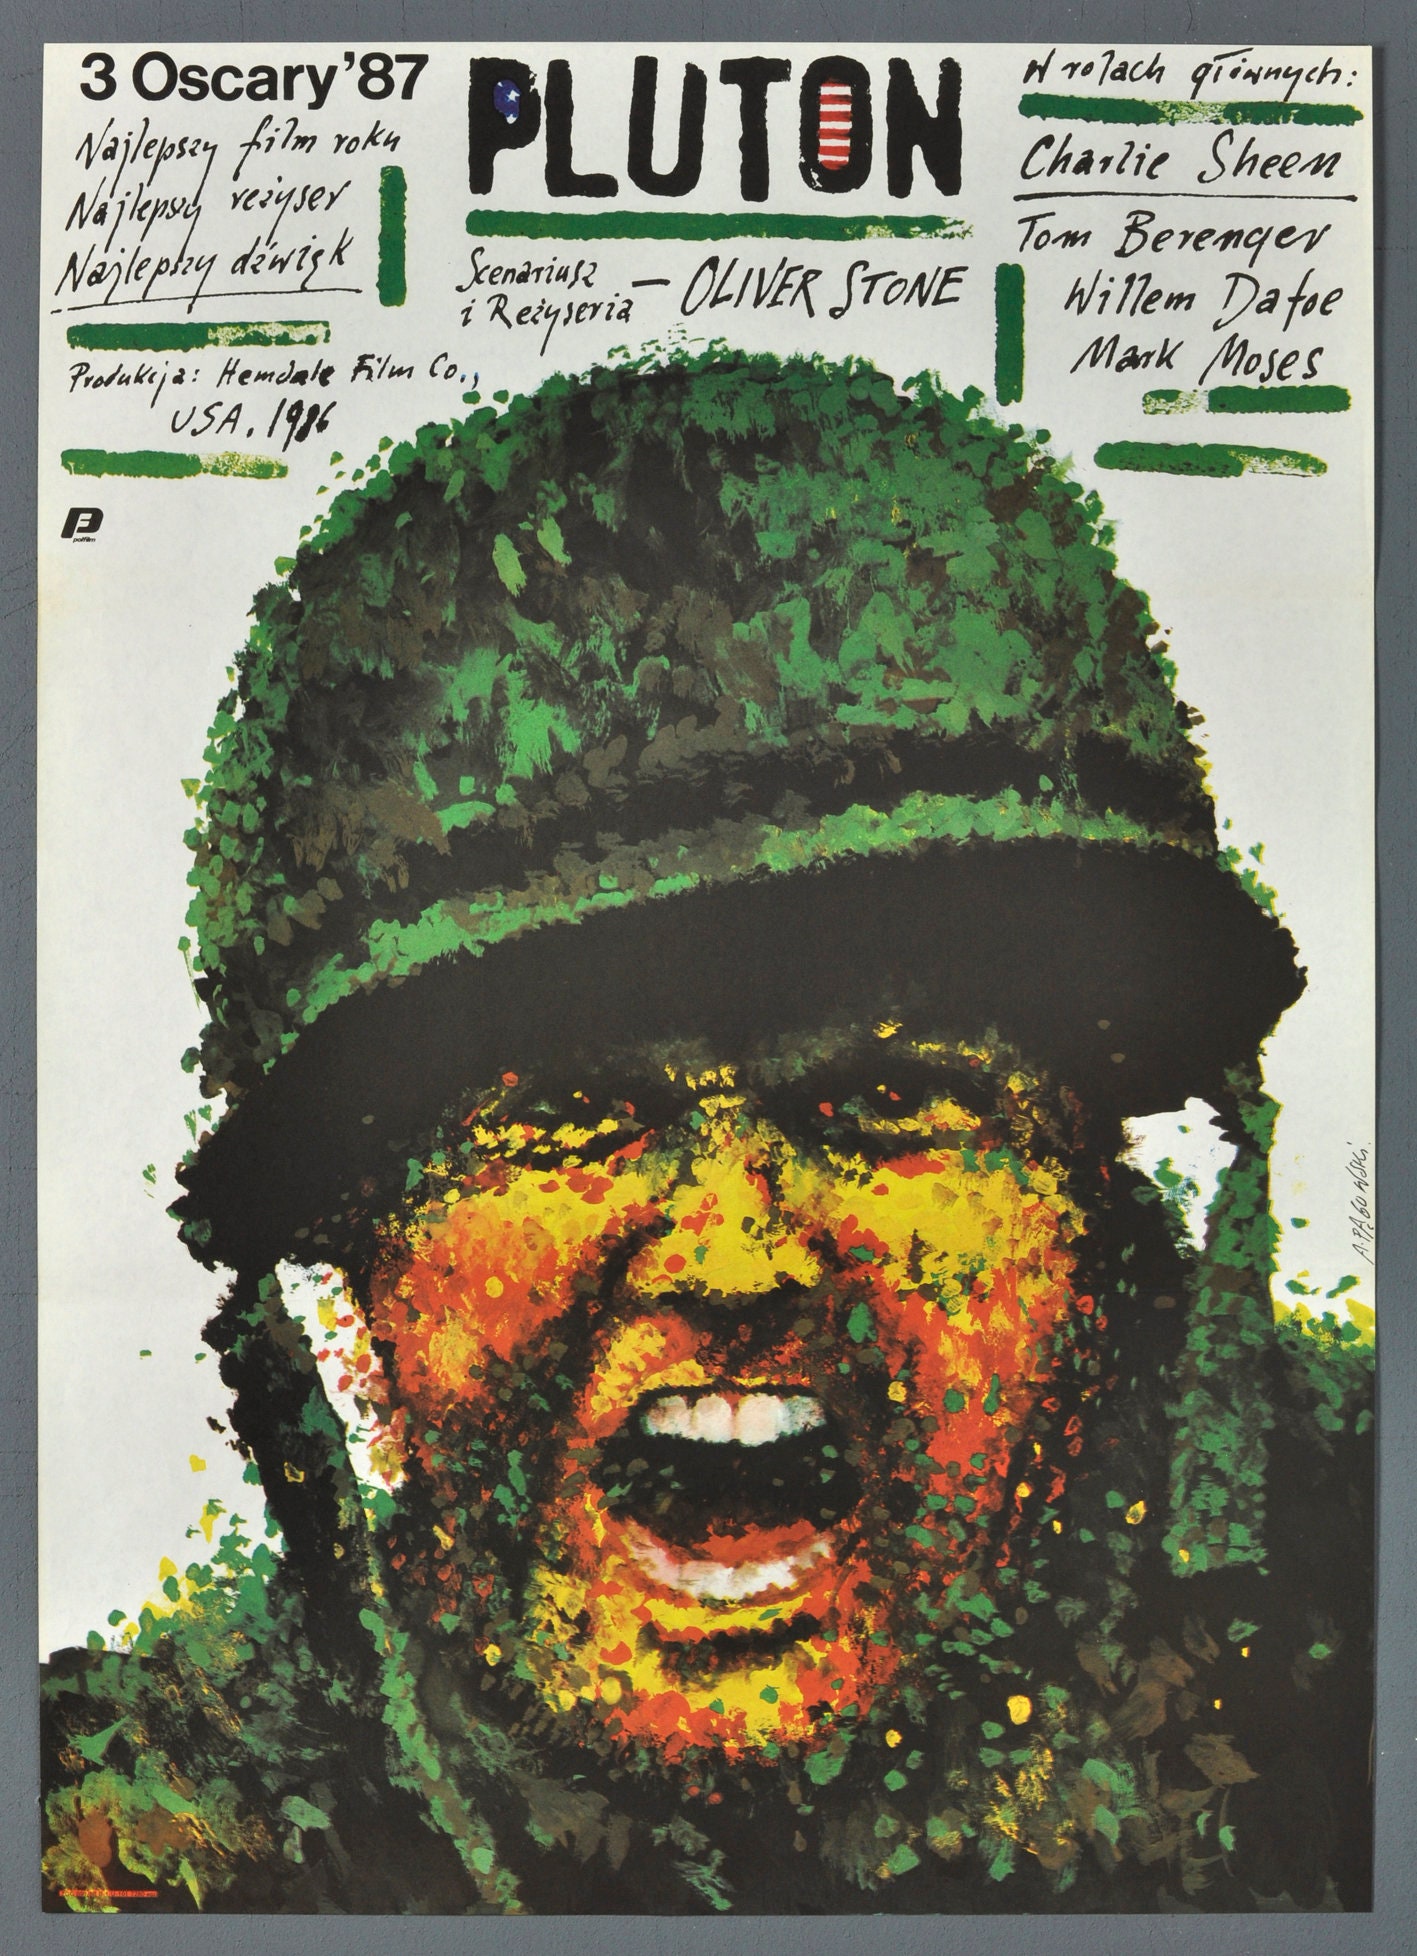 Platoon ORIGINAL 1988 Vintage Polish Movie Poster - Oliver Stone - Charlie Sheen - Pagowski Art